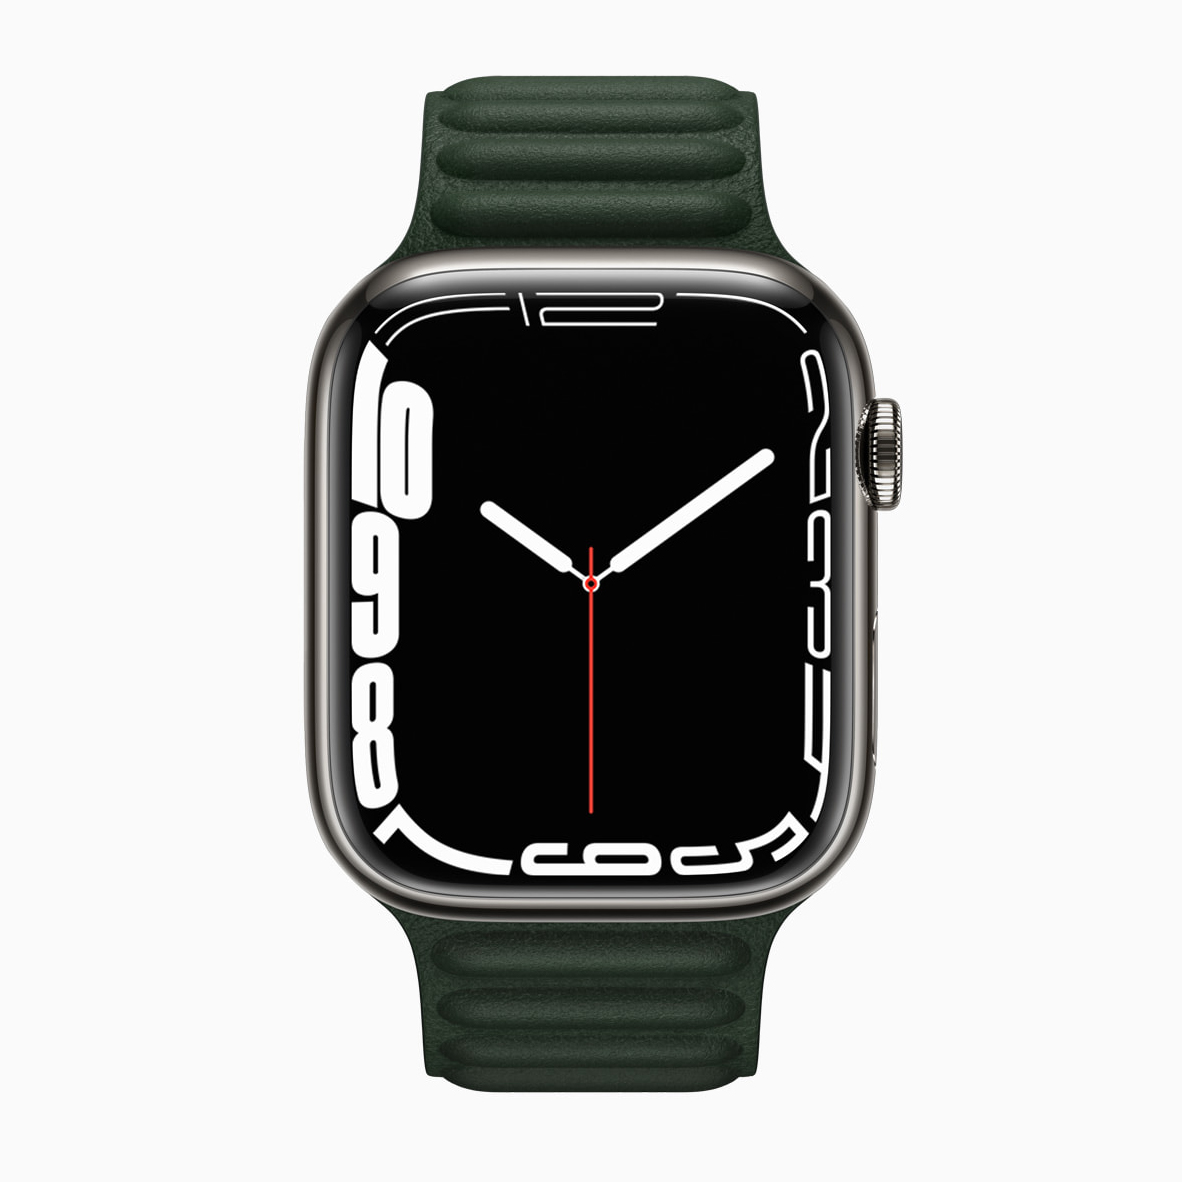 apple watch series 7 press render green leather strap